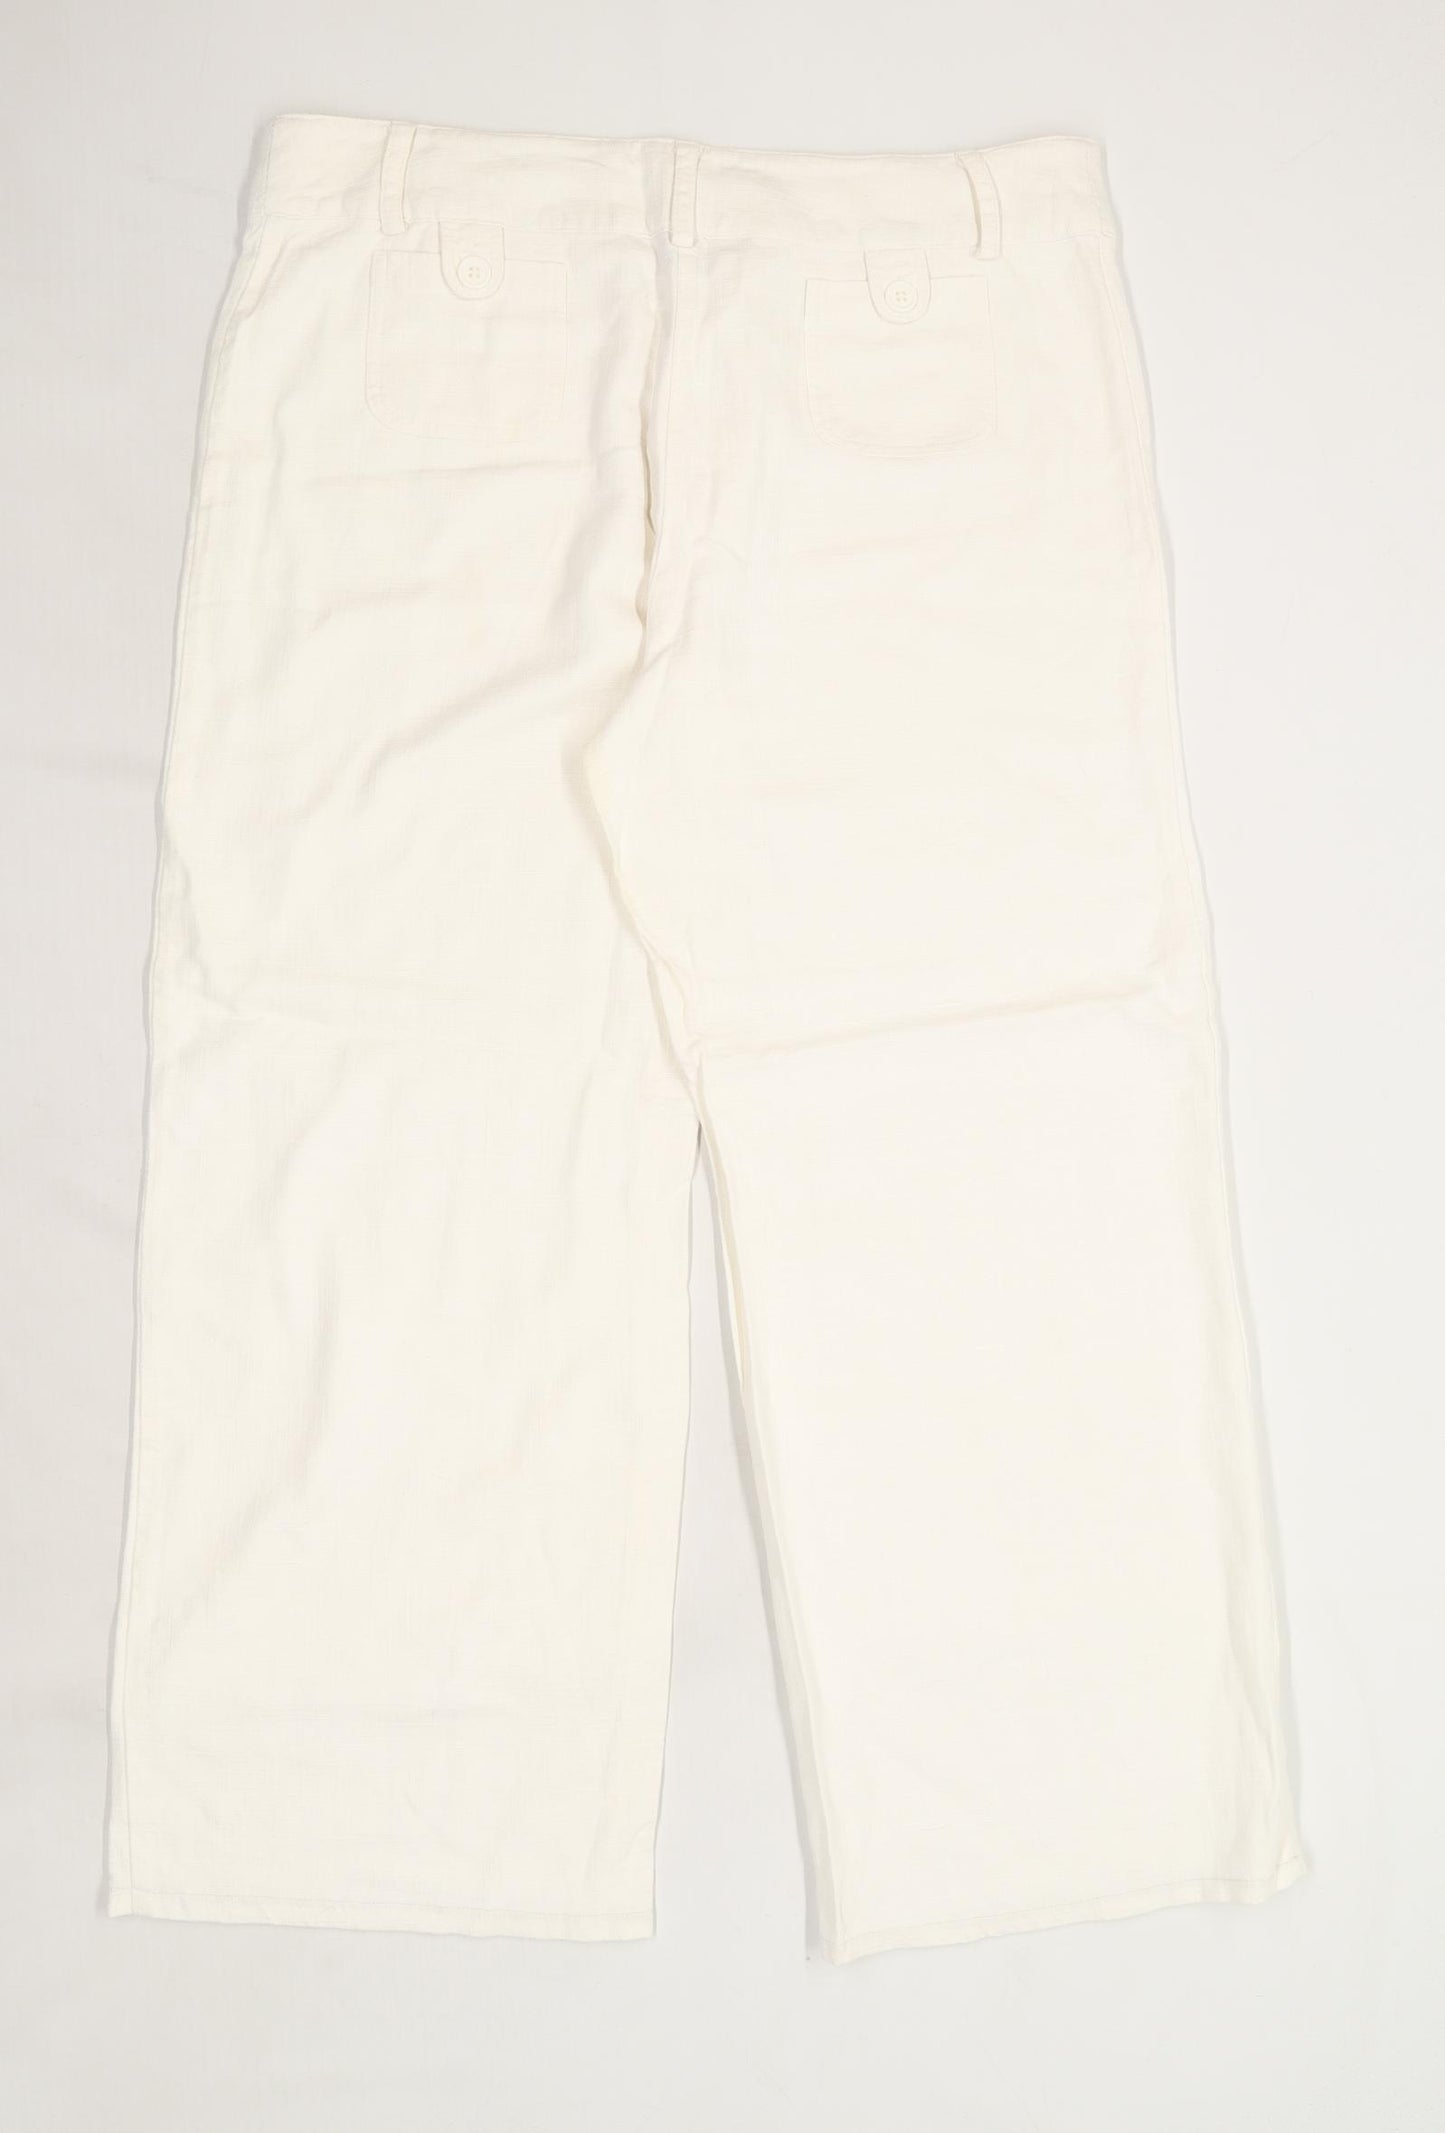 Womens The Stock Shop White Linen Blend Trousers Size 18/L27